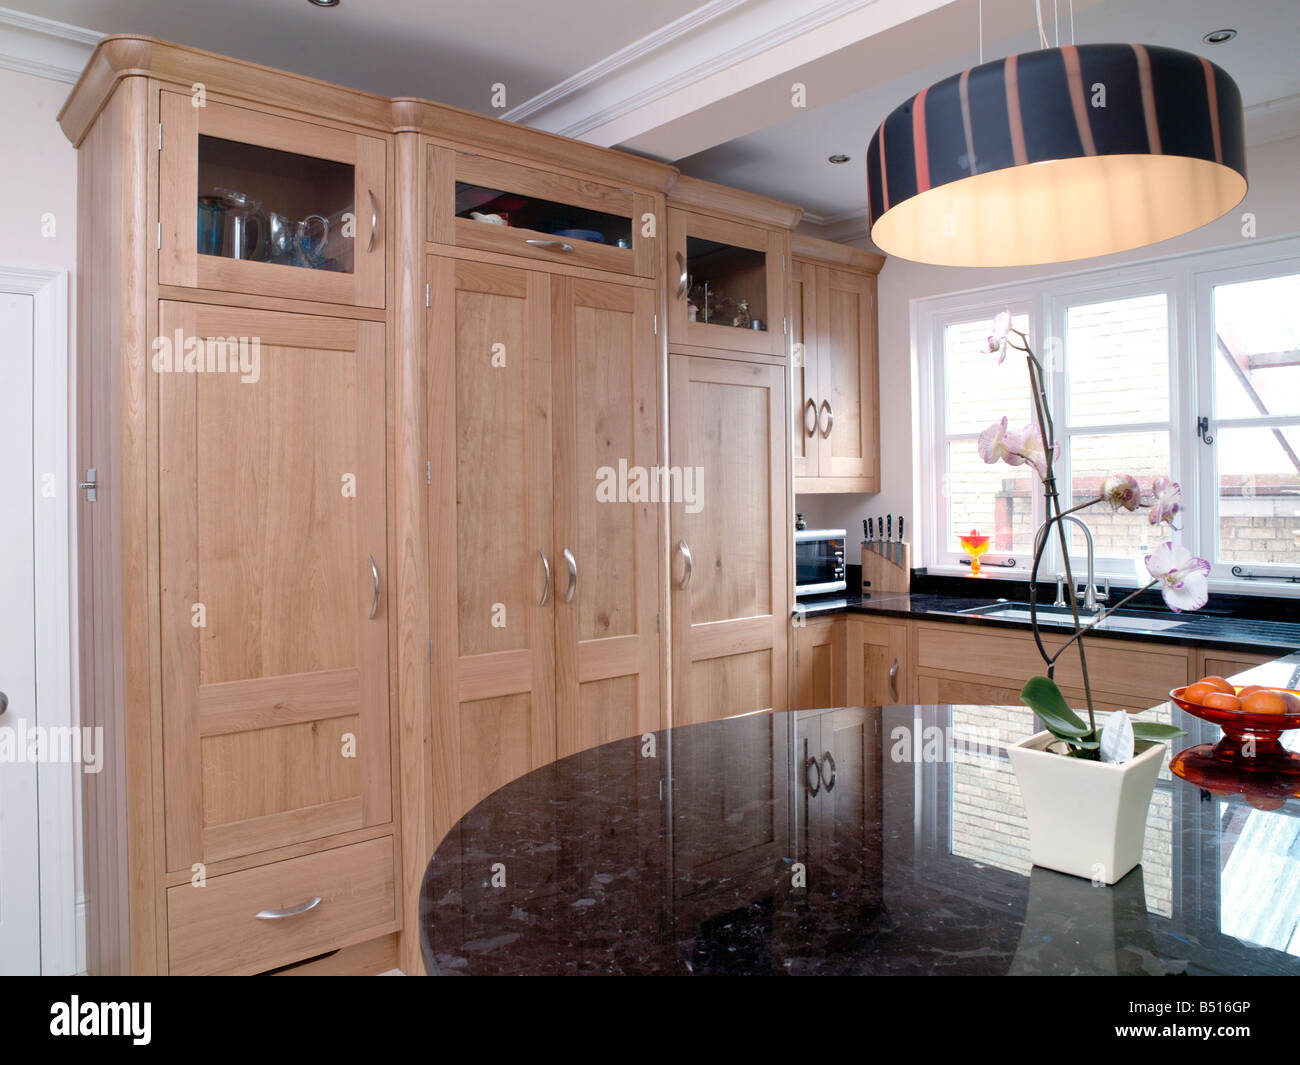 John Ladbury kitchen in light wood and off white paint Stock Photo